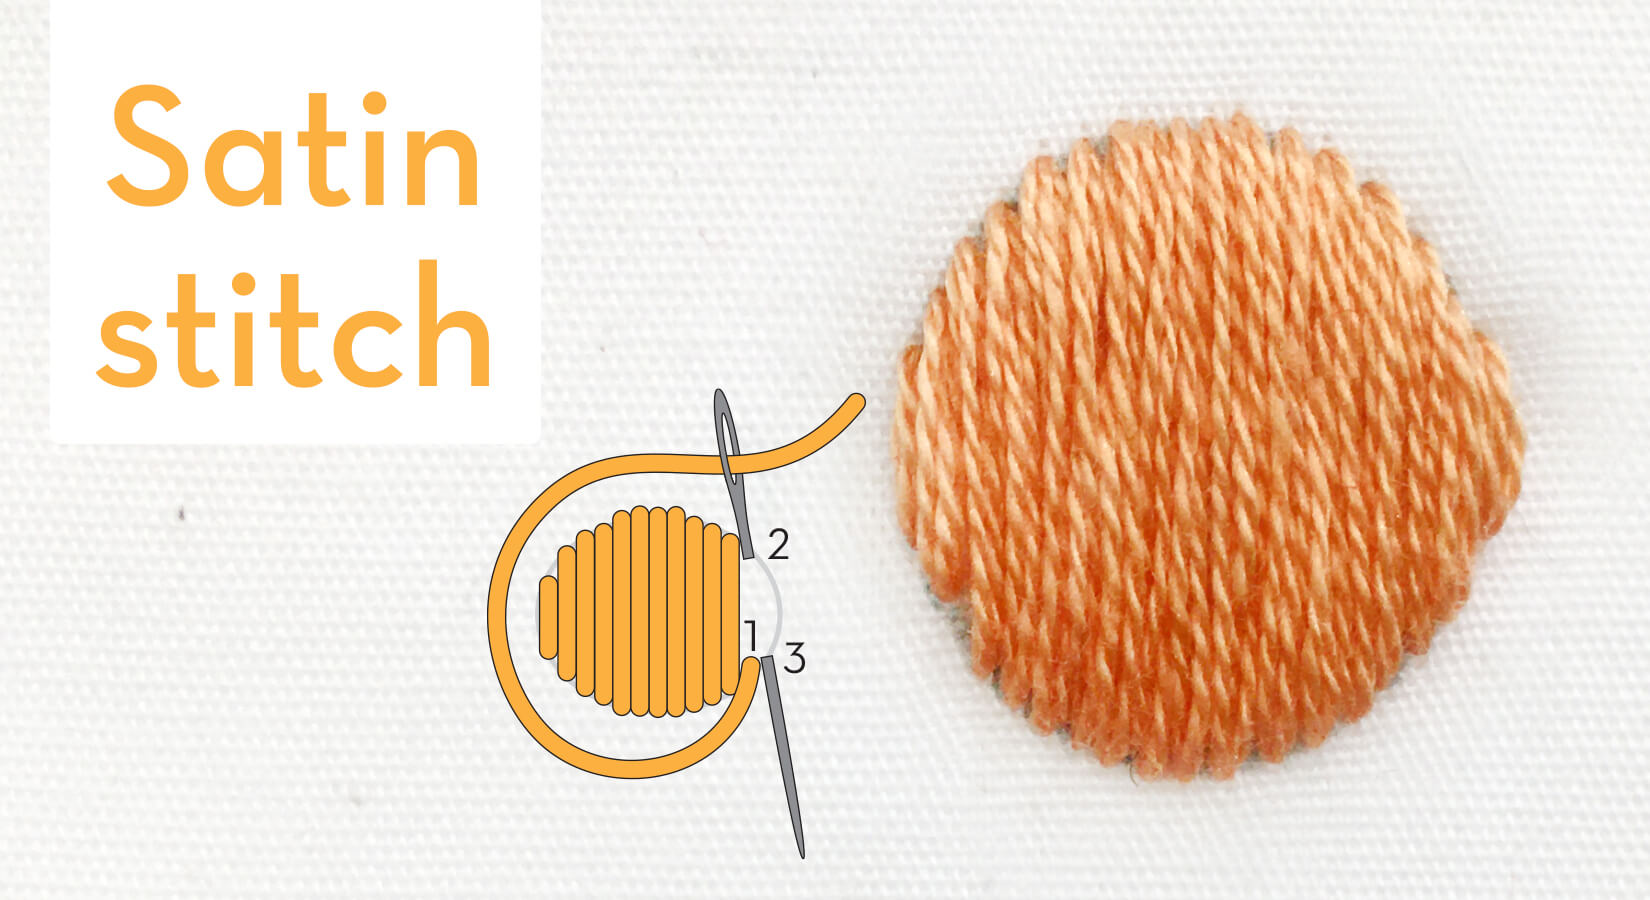 Satin stitch - embroidery stitches